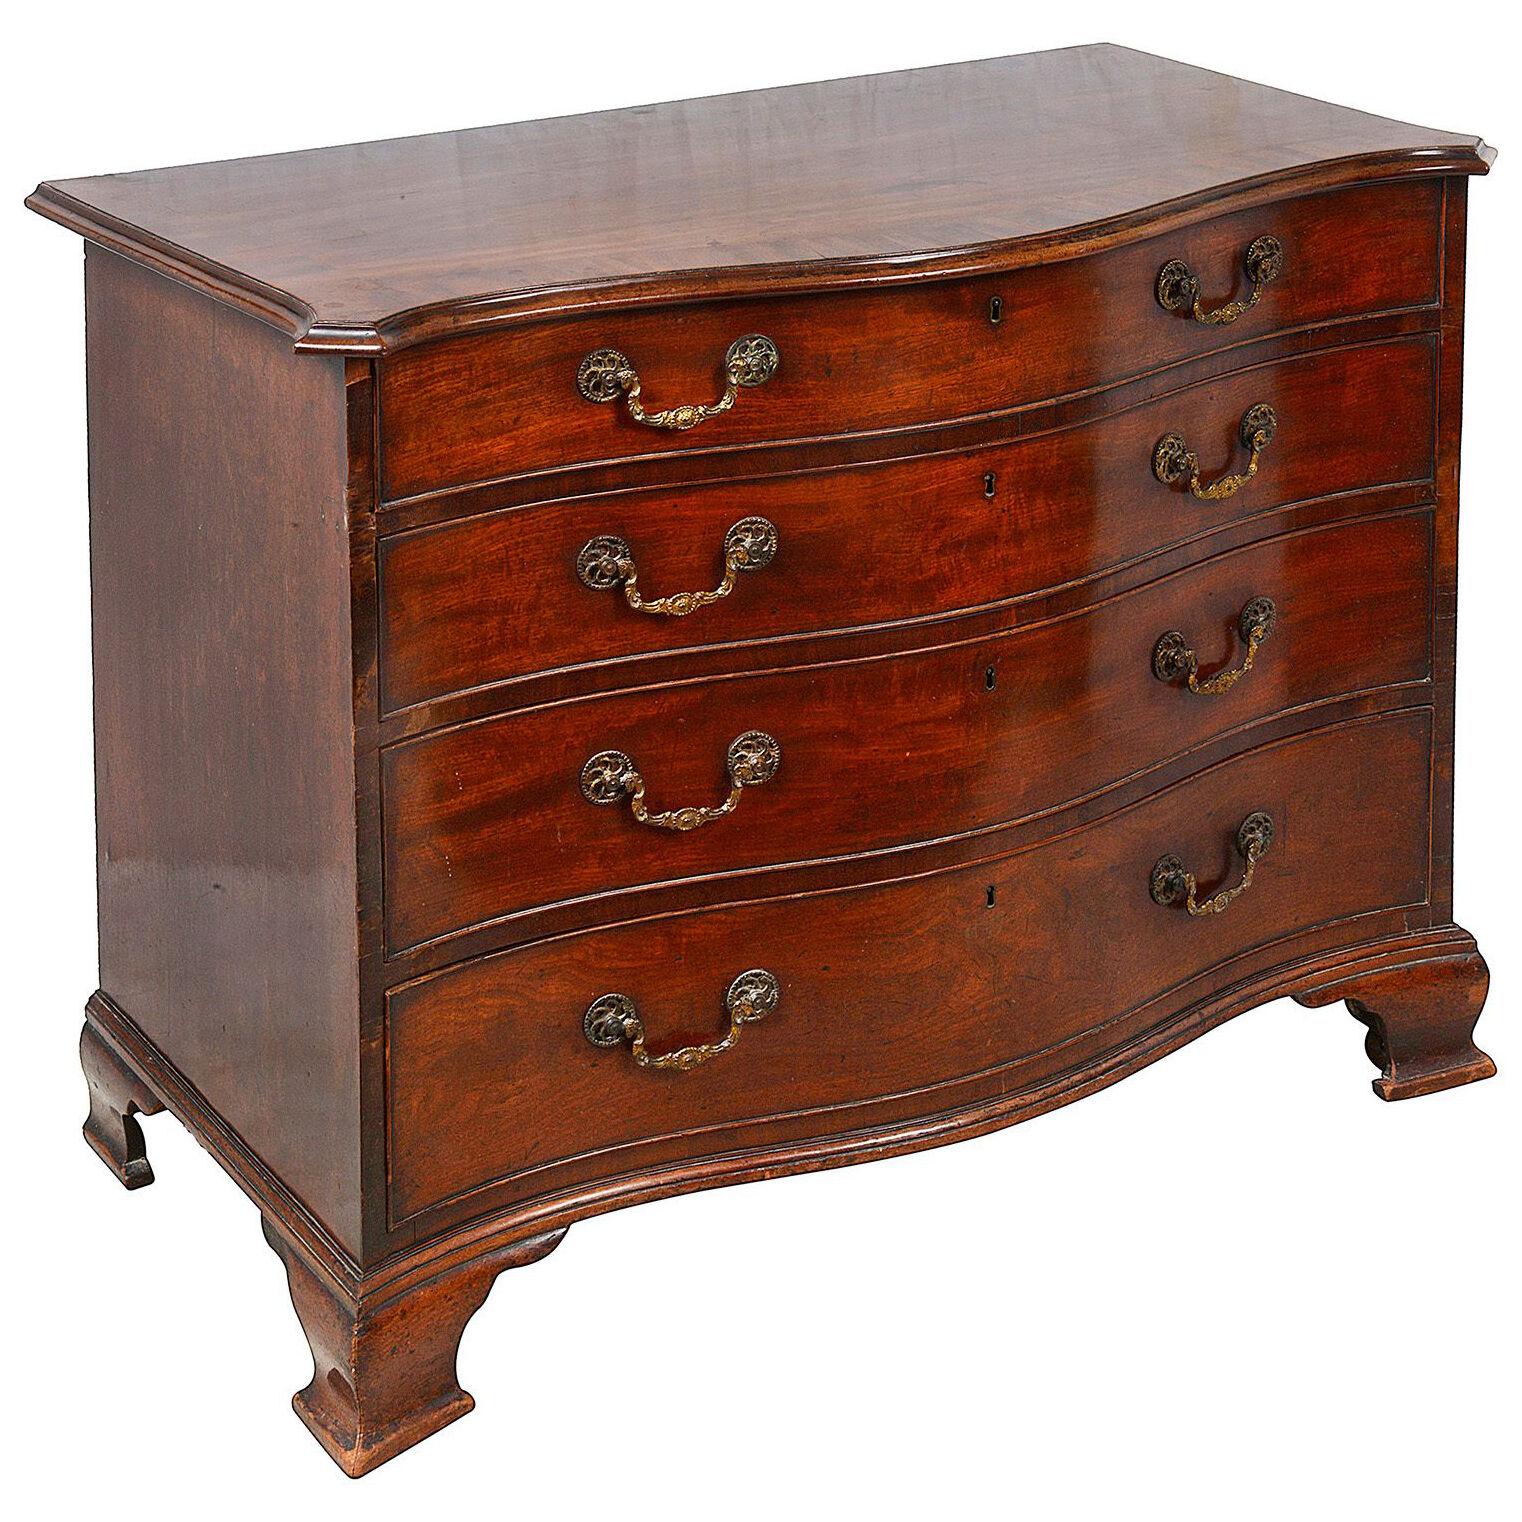 Georgian period mahogany serpentine chest of drawers, circa 1780